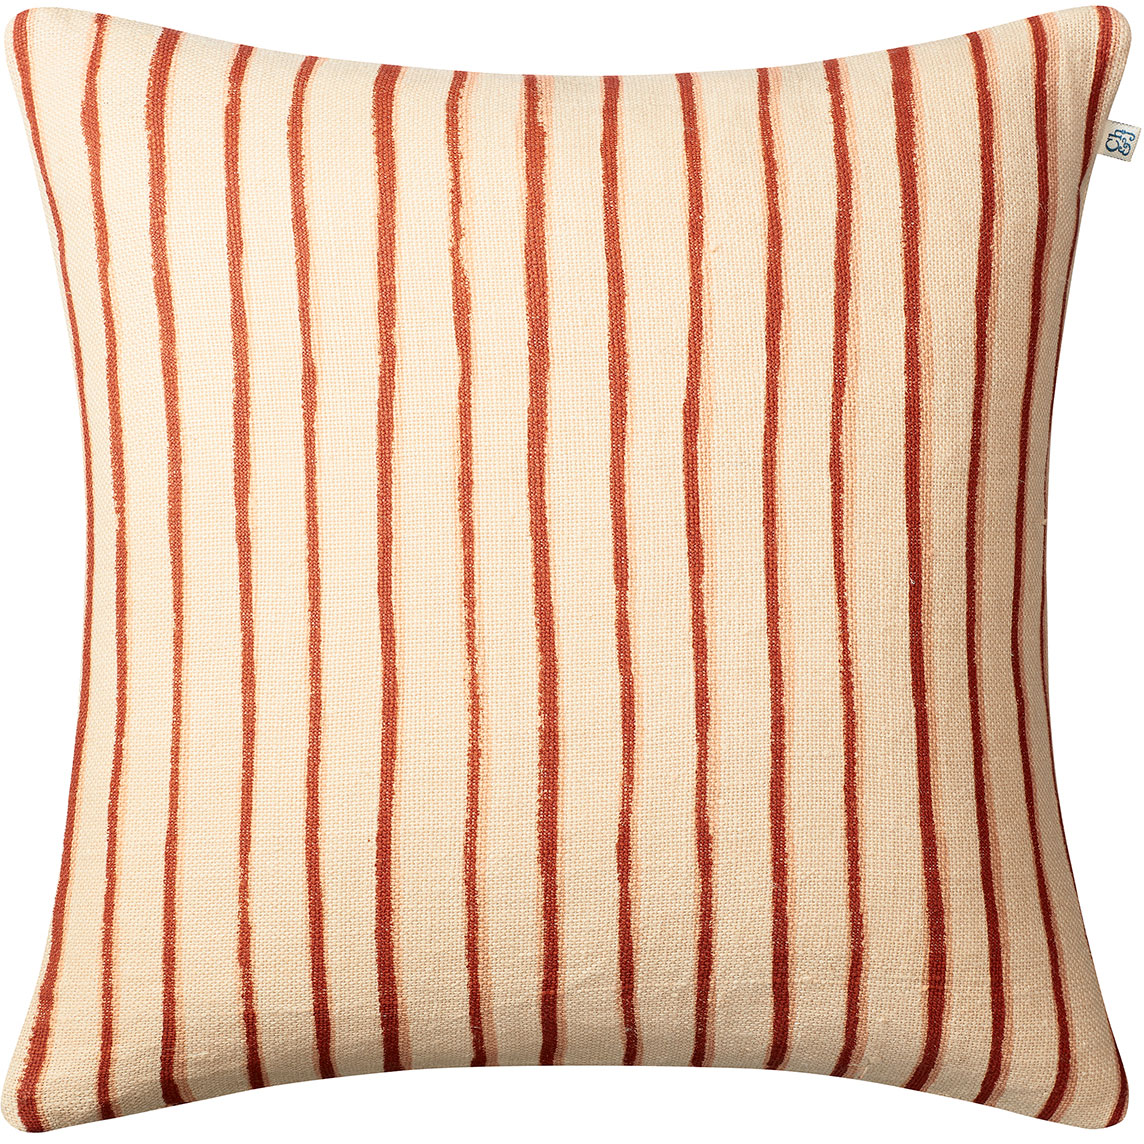 Jaipur Stripe Tyynynpäällinen 50x50 cm, Light Beige / Apricot Orange / Rose